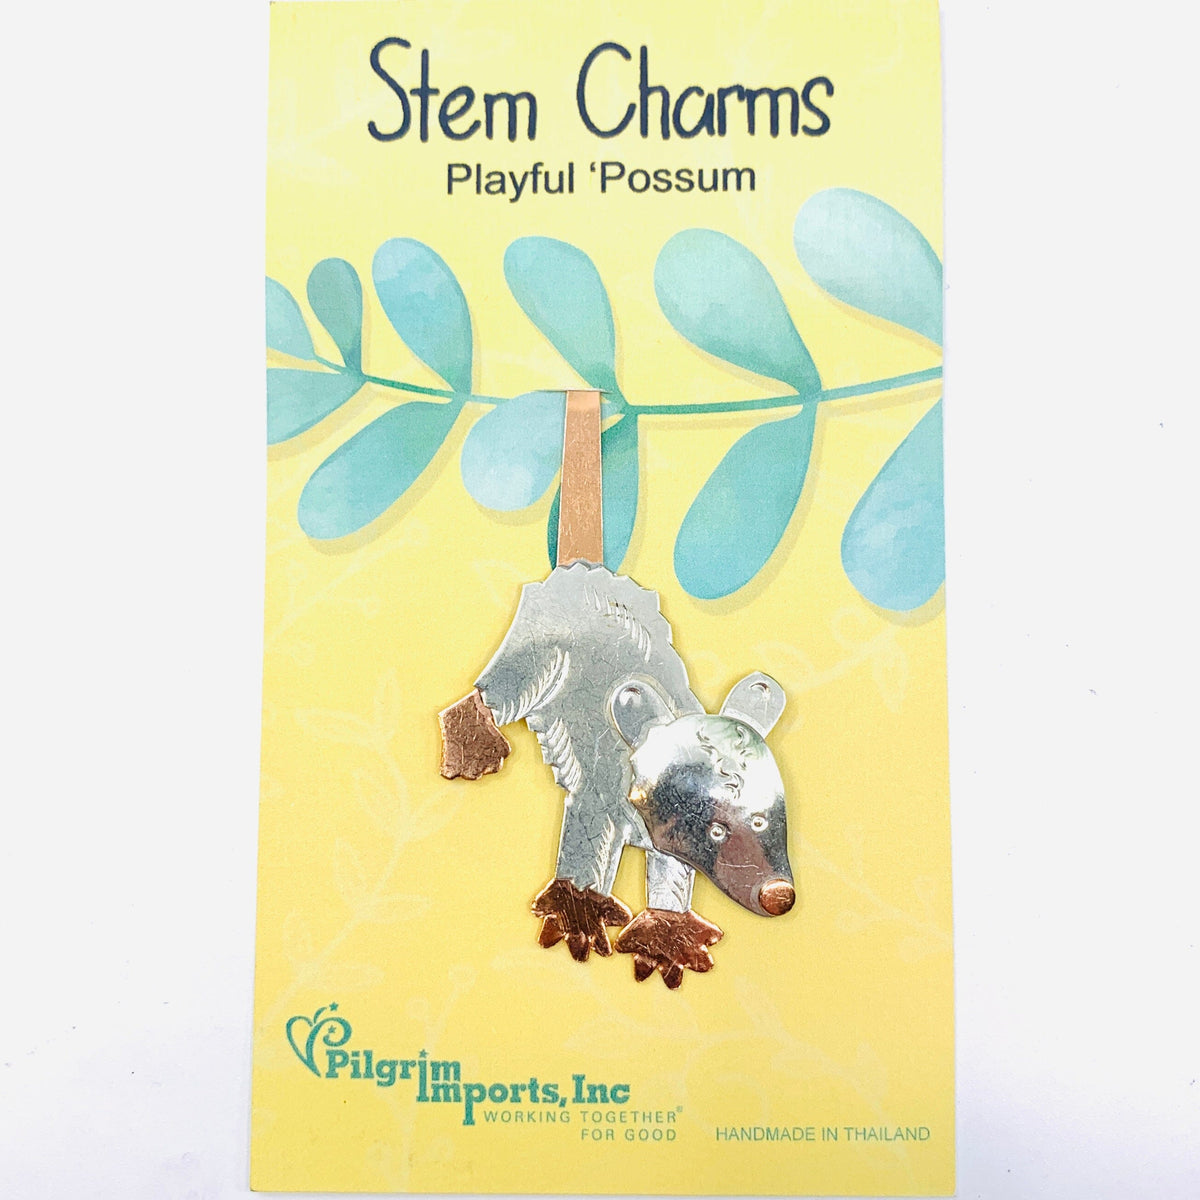 Stem Charms 9, Playful ‘Possum